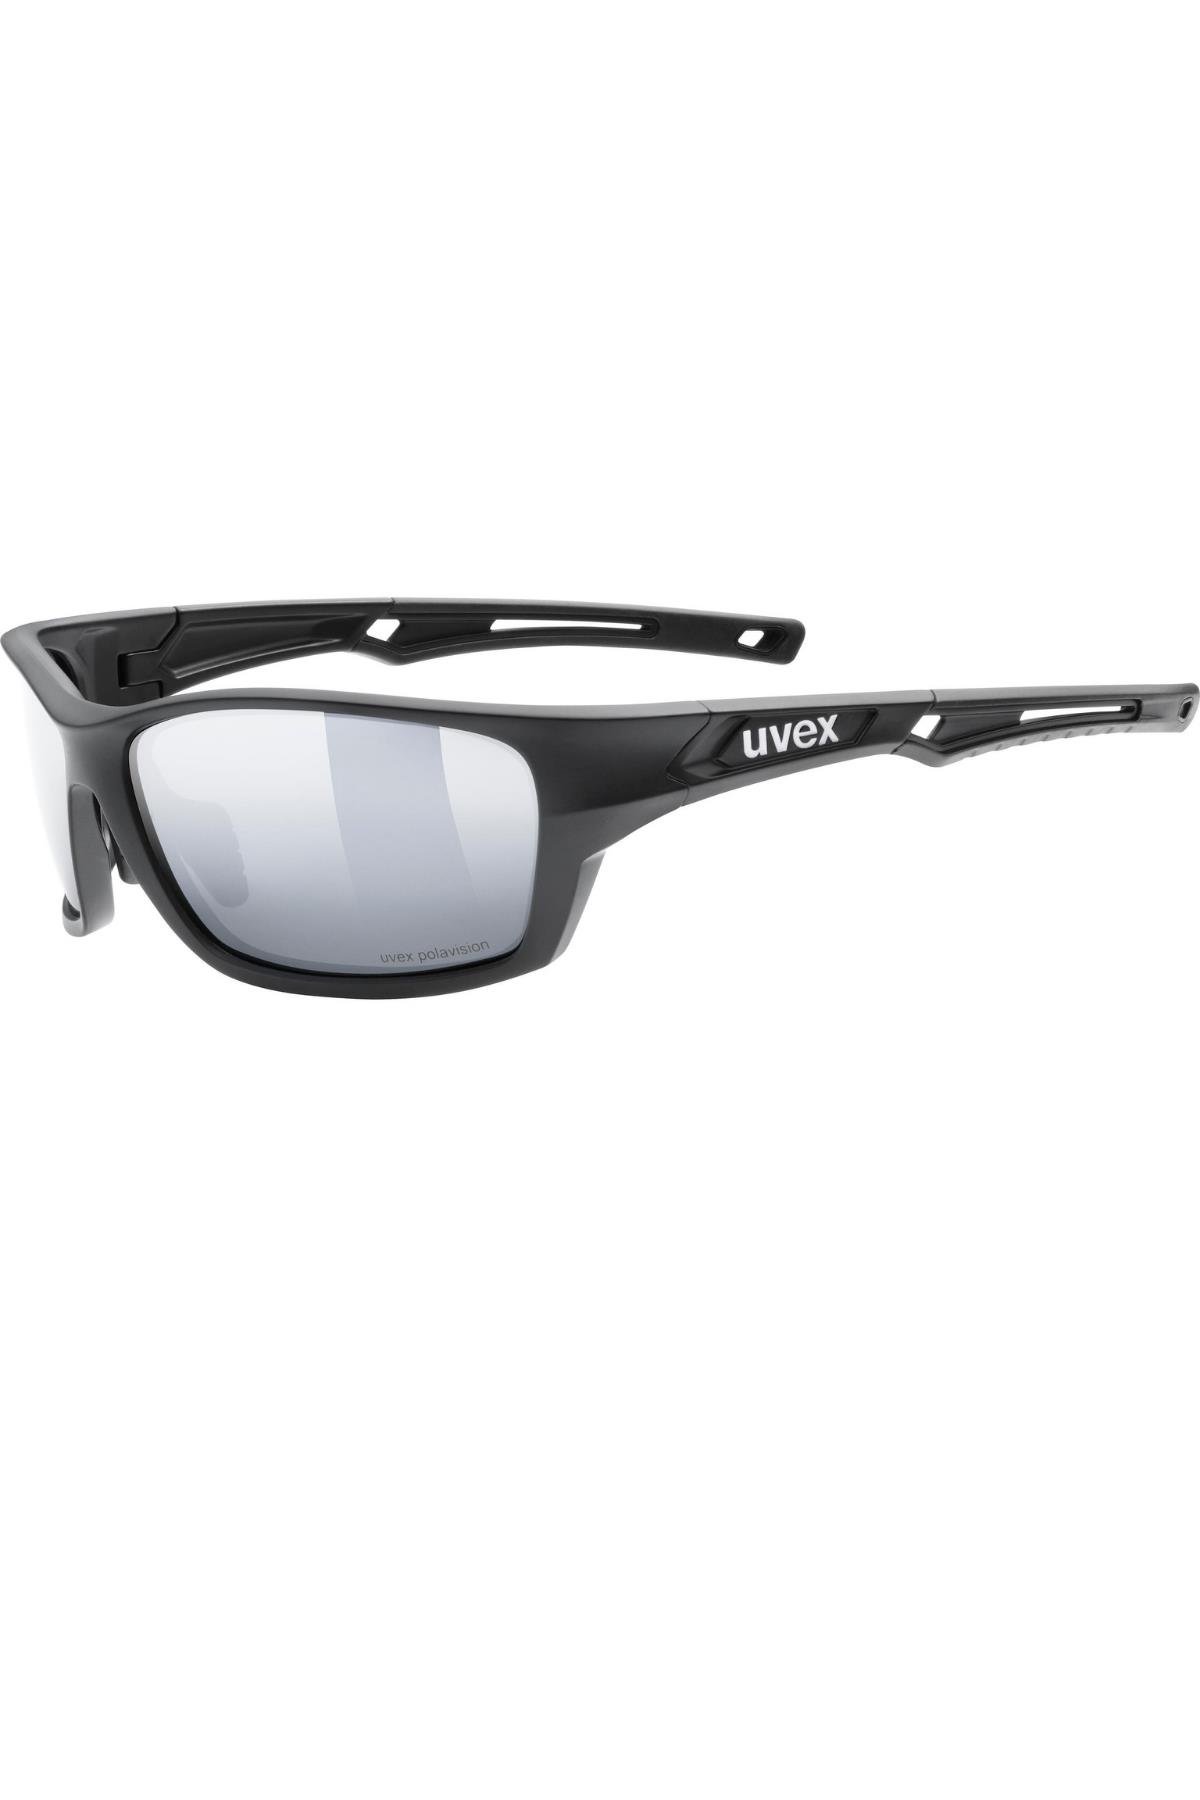 Uvex Sportstyle 232 P Black Mat/Mir.Silv Güneş Gözlüğü